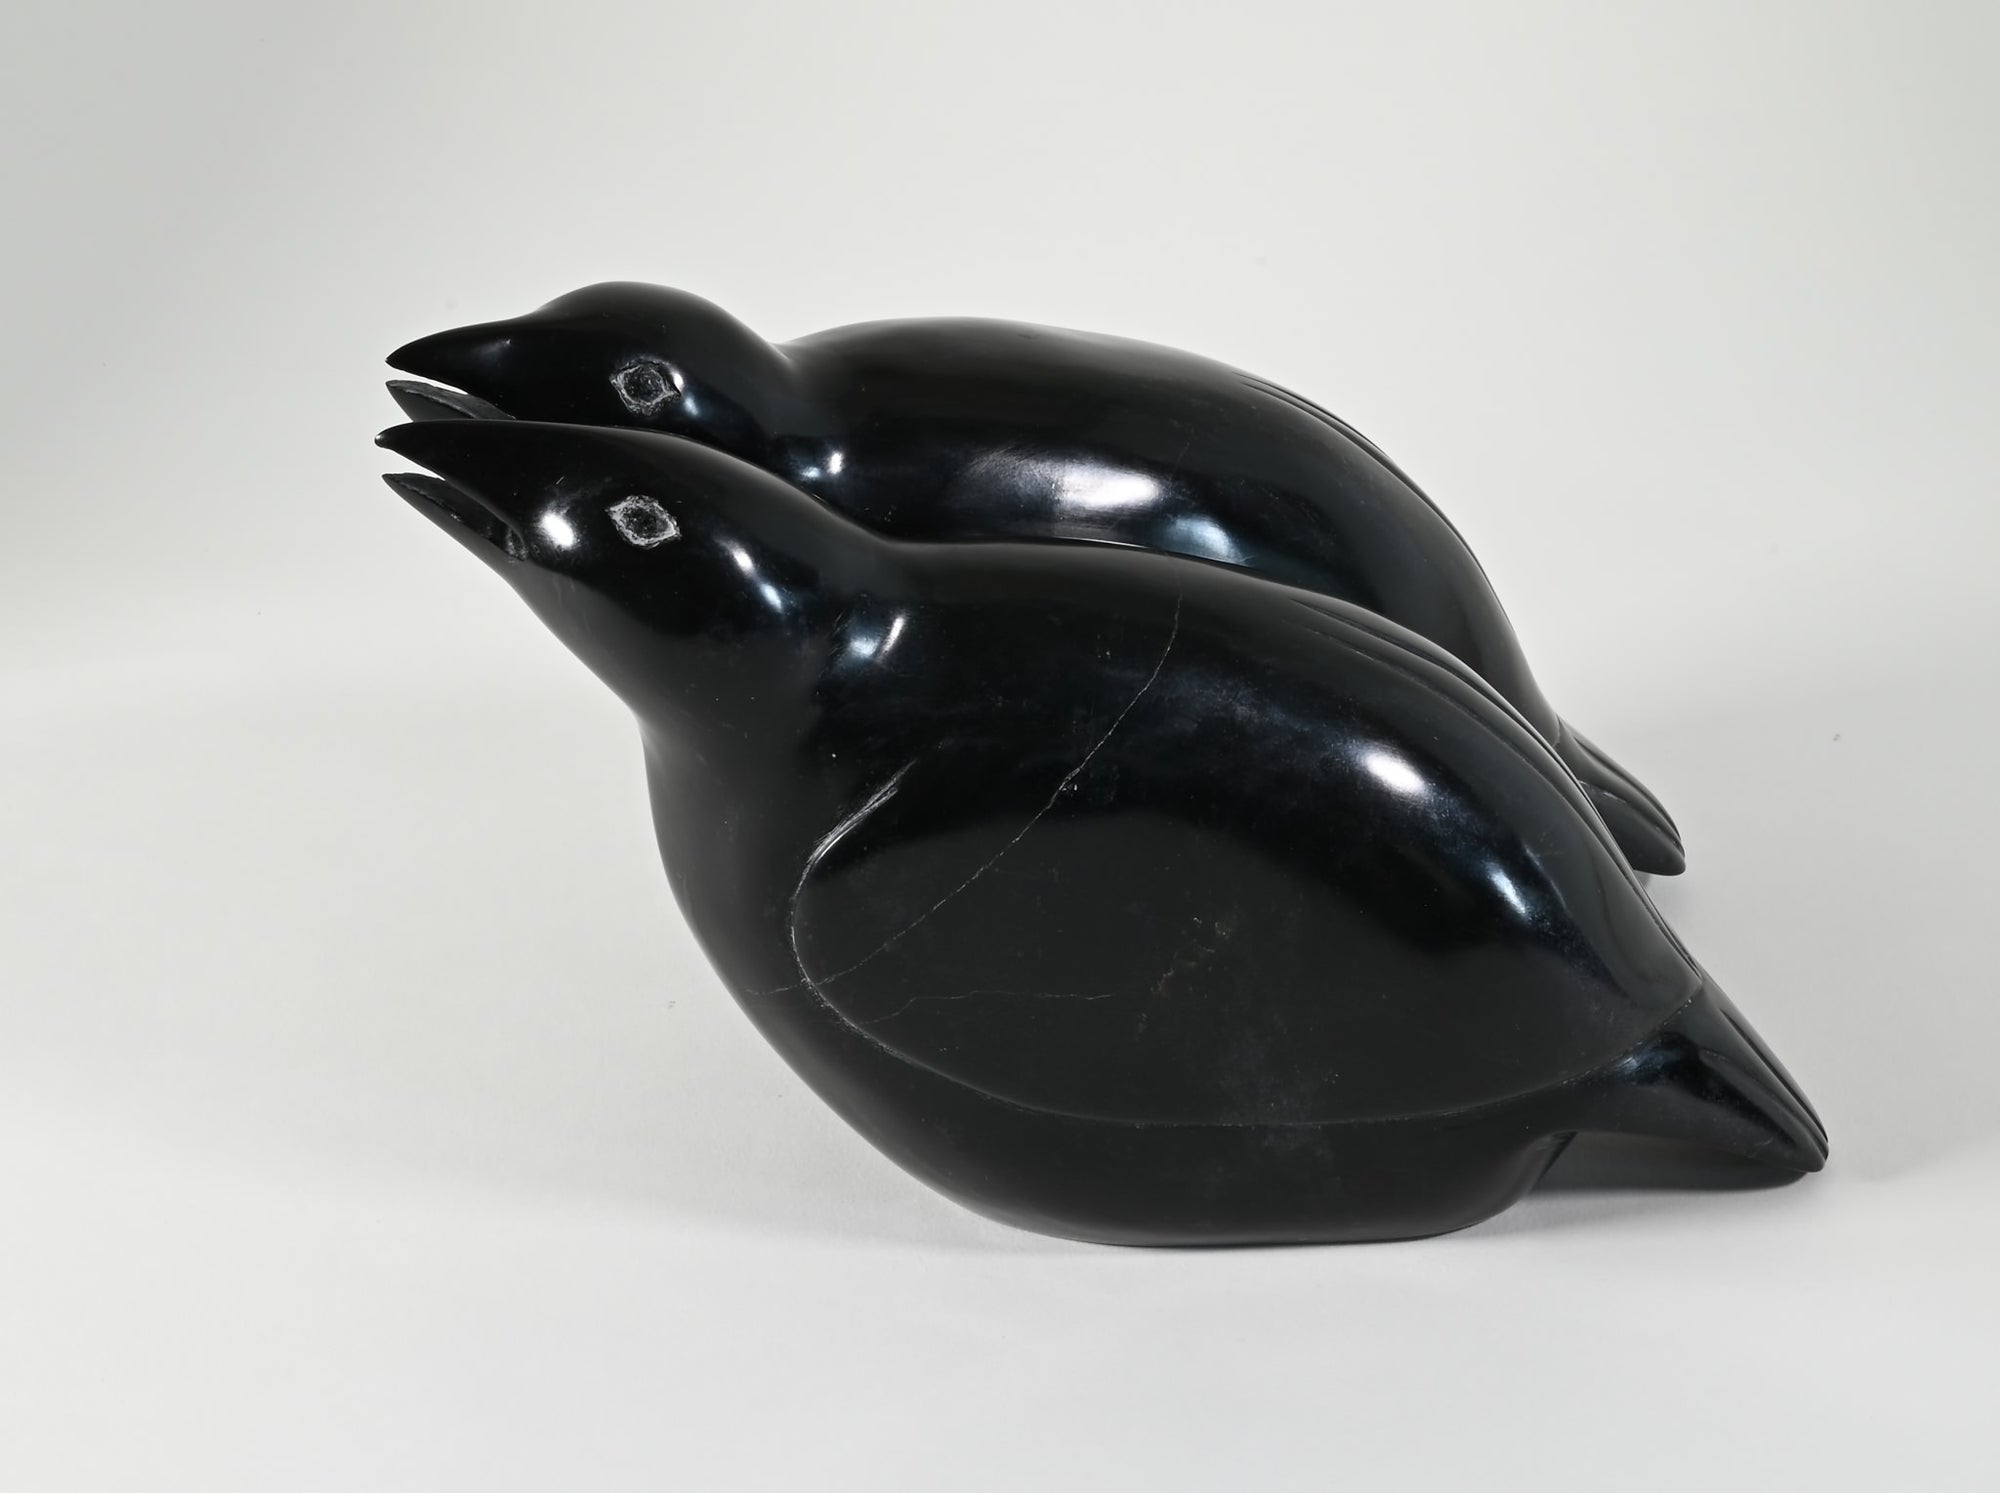 Two Ravens by Annago Ashevak